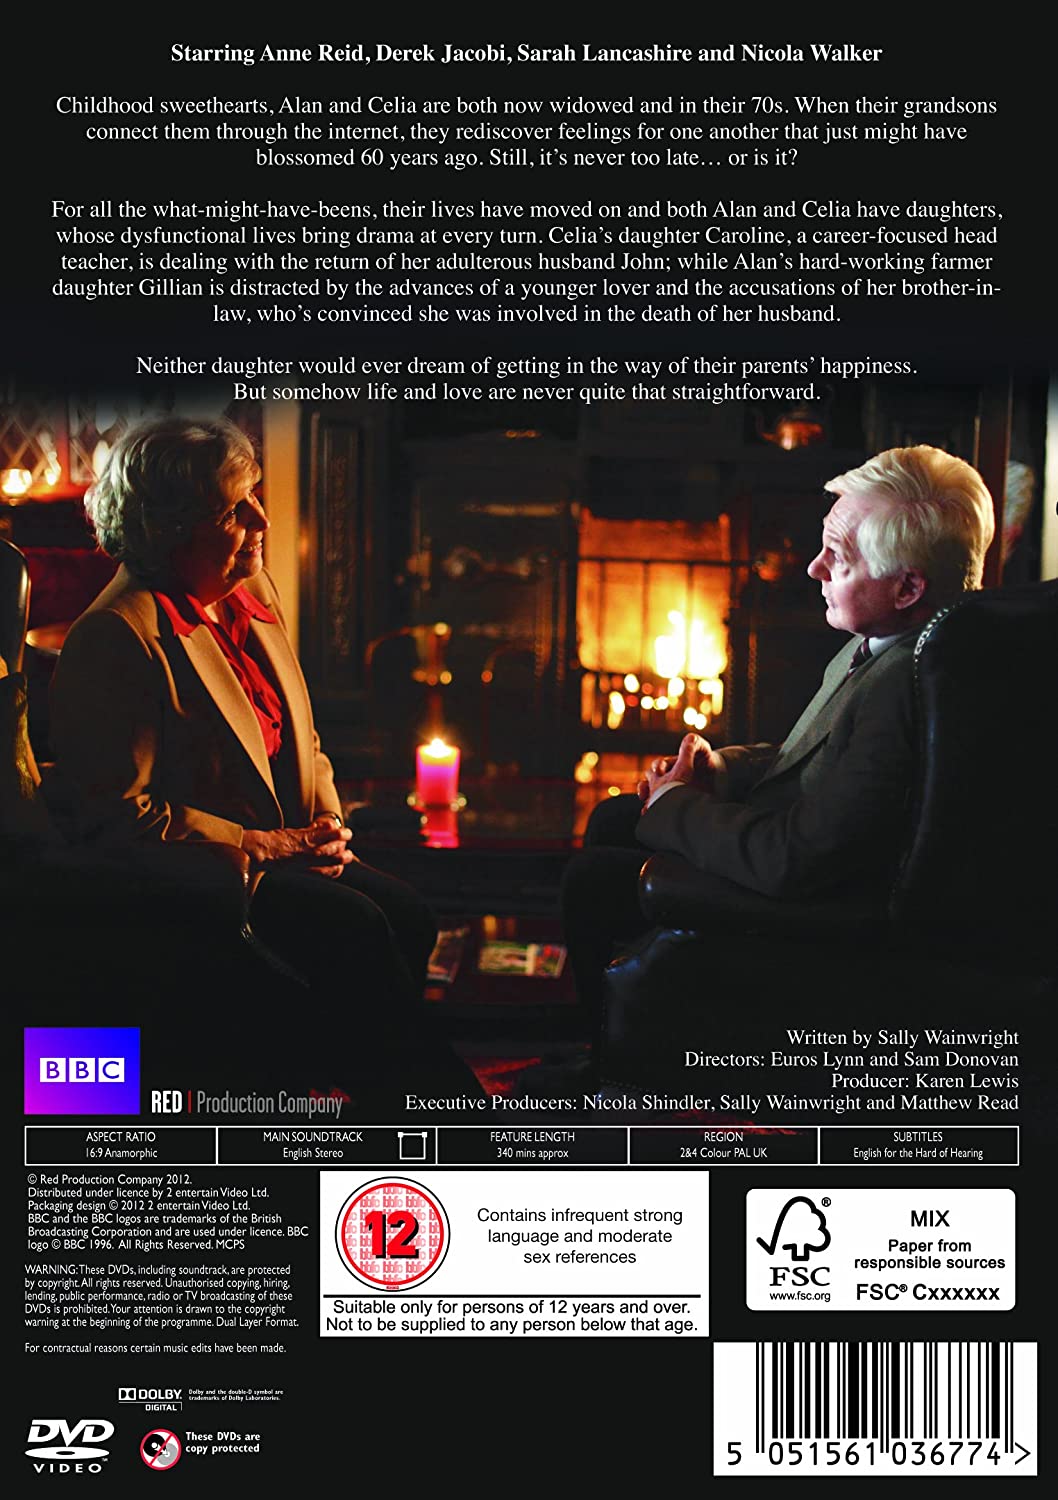 Last Tango in Halifax: Series 1 [2012]